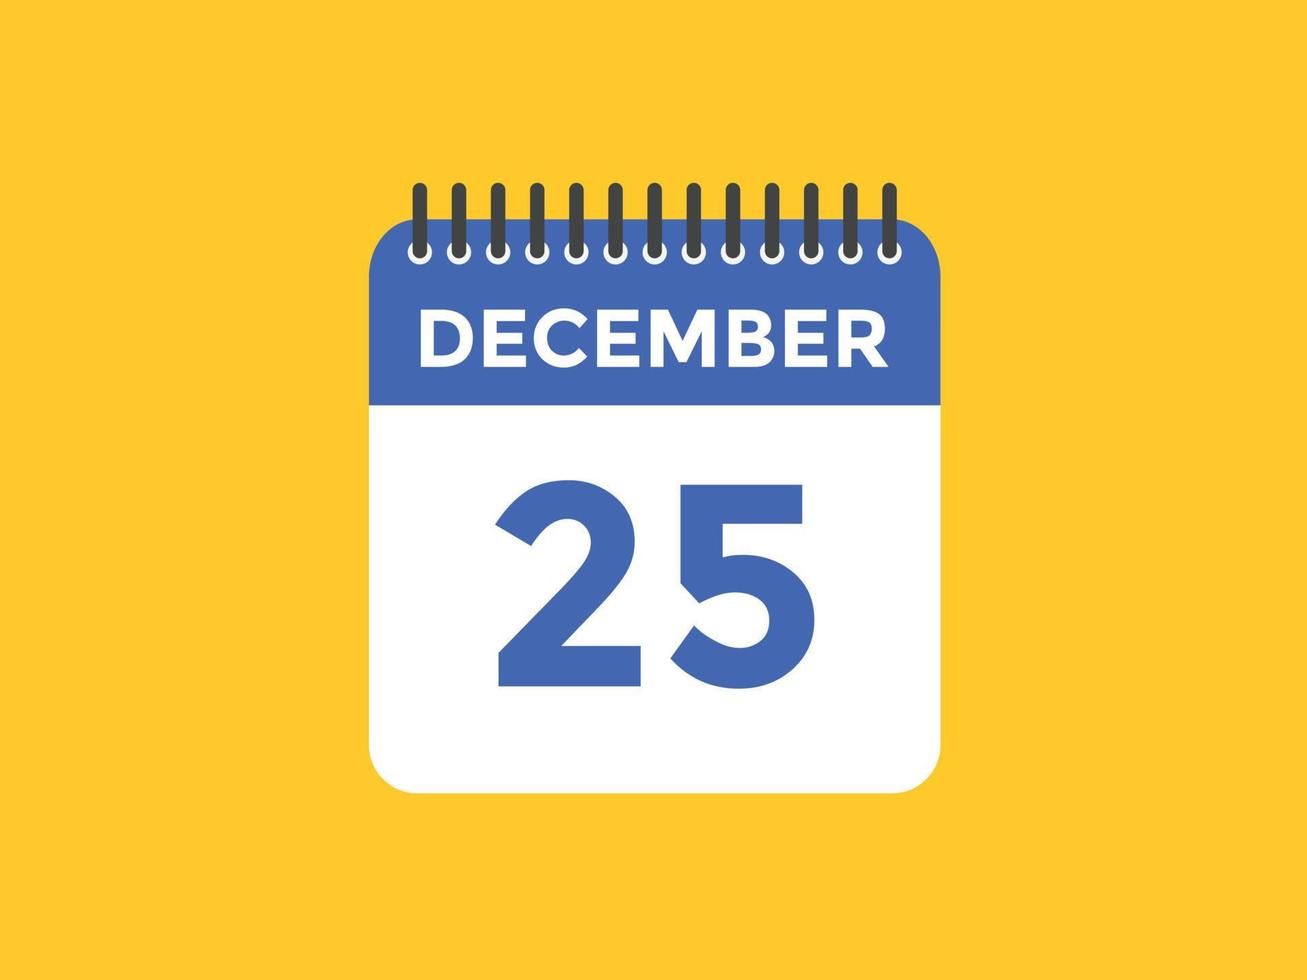 december 25 calendar reminder. 25th december daily calendar icon template. Calendar 25th december icon Design template. Vector illustration